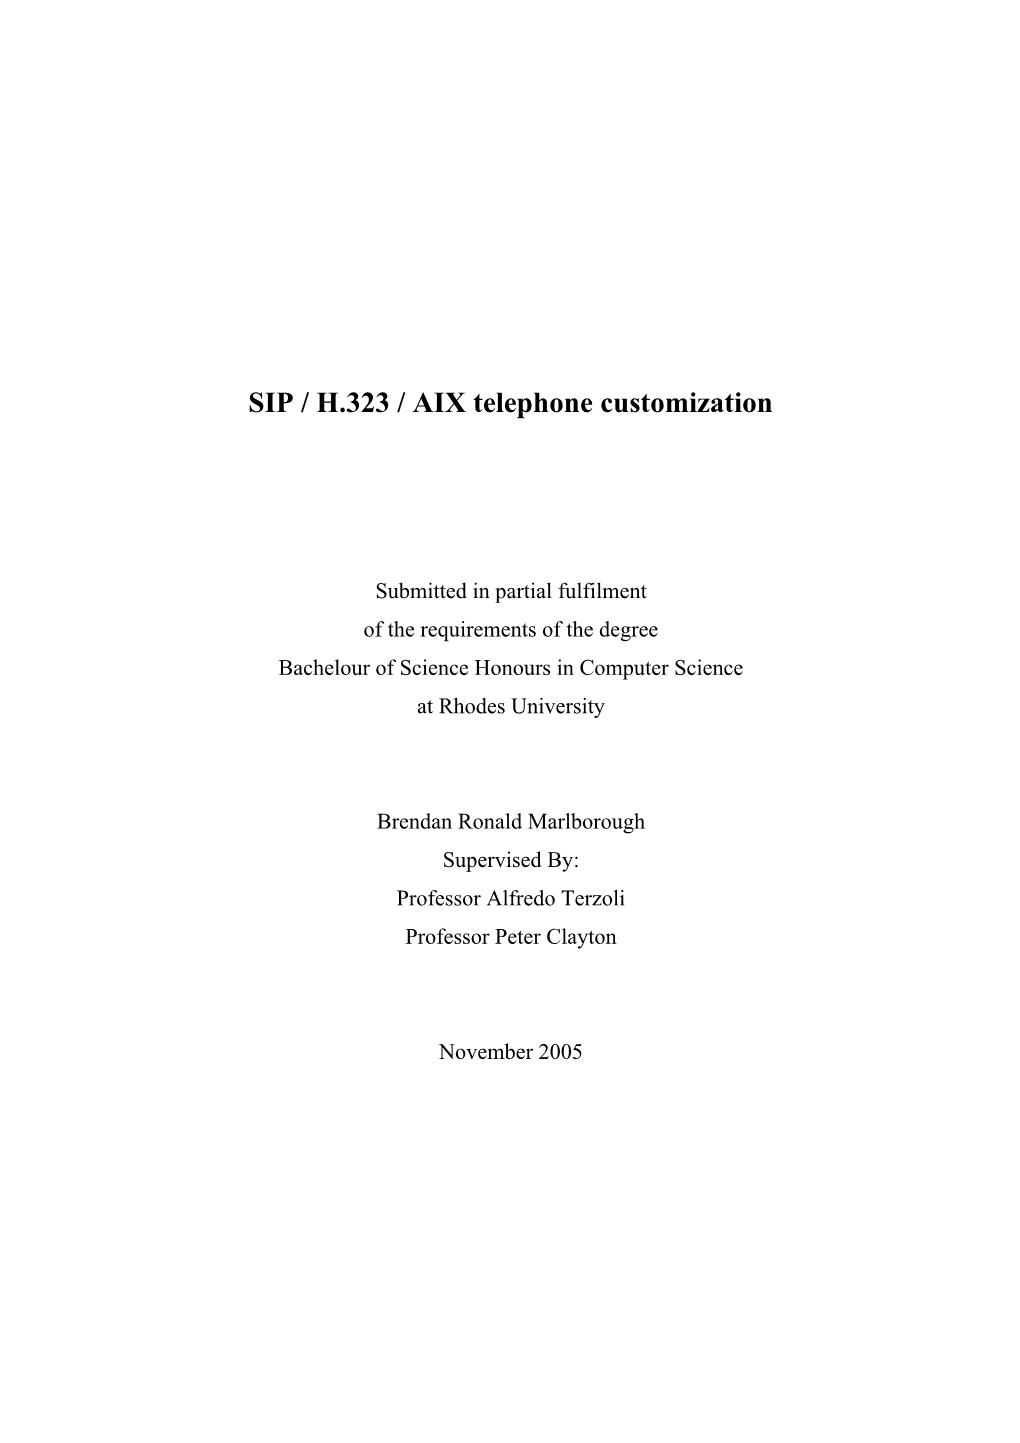 SIP / H323 / IAX Telephone Customisation